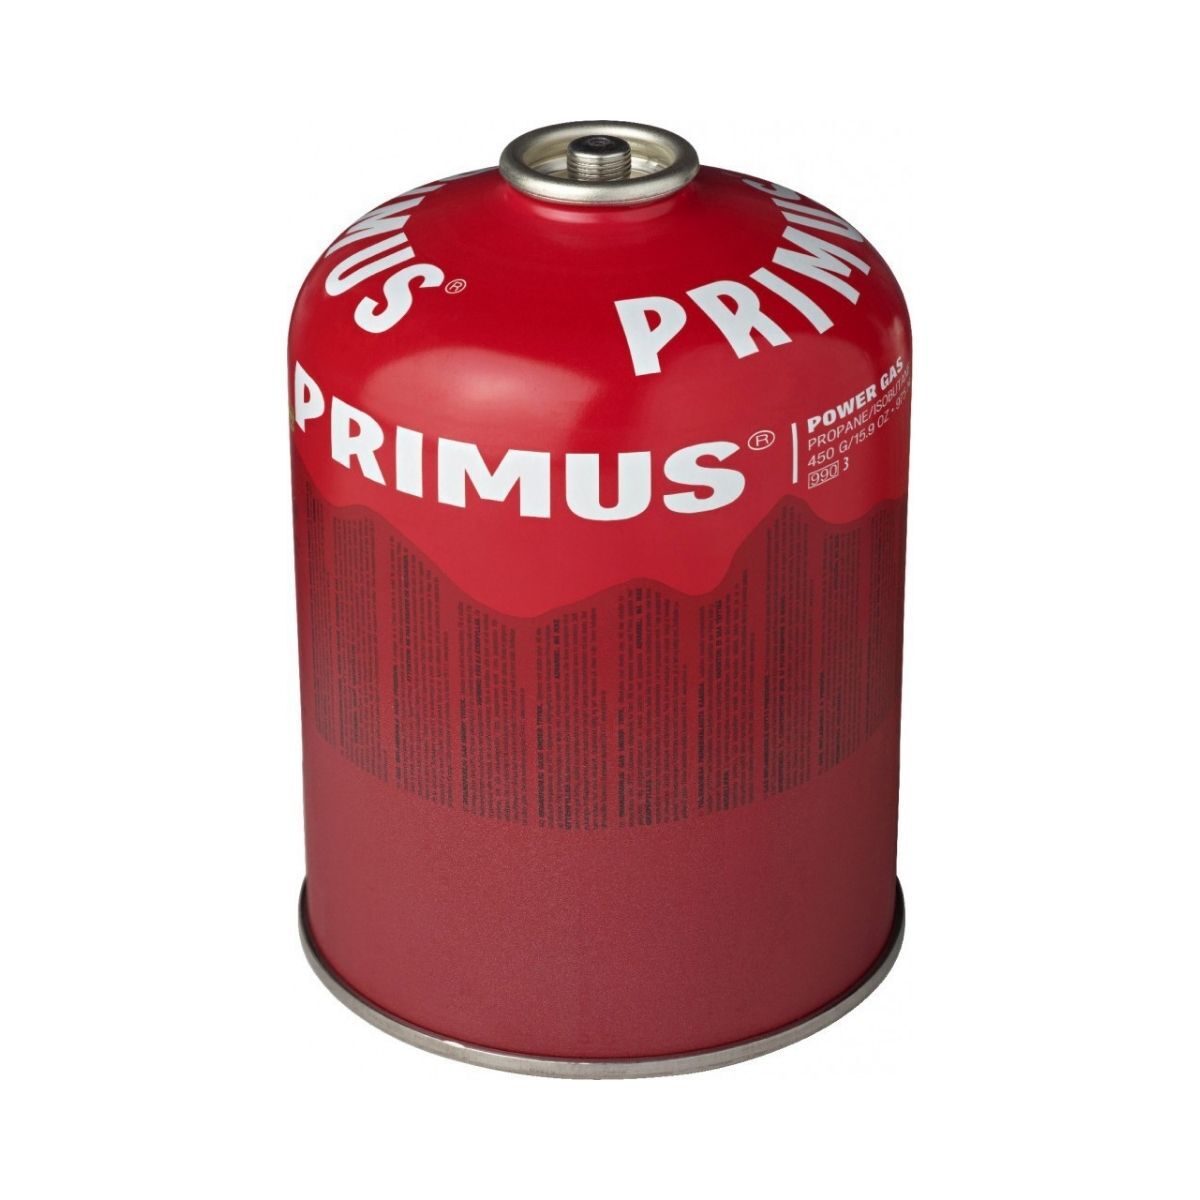 Primus Power Gas 450 g L2 - Cartouche de gaz | Hardloop